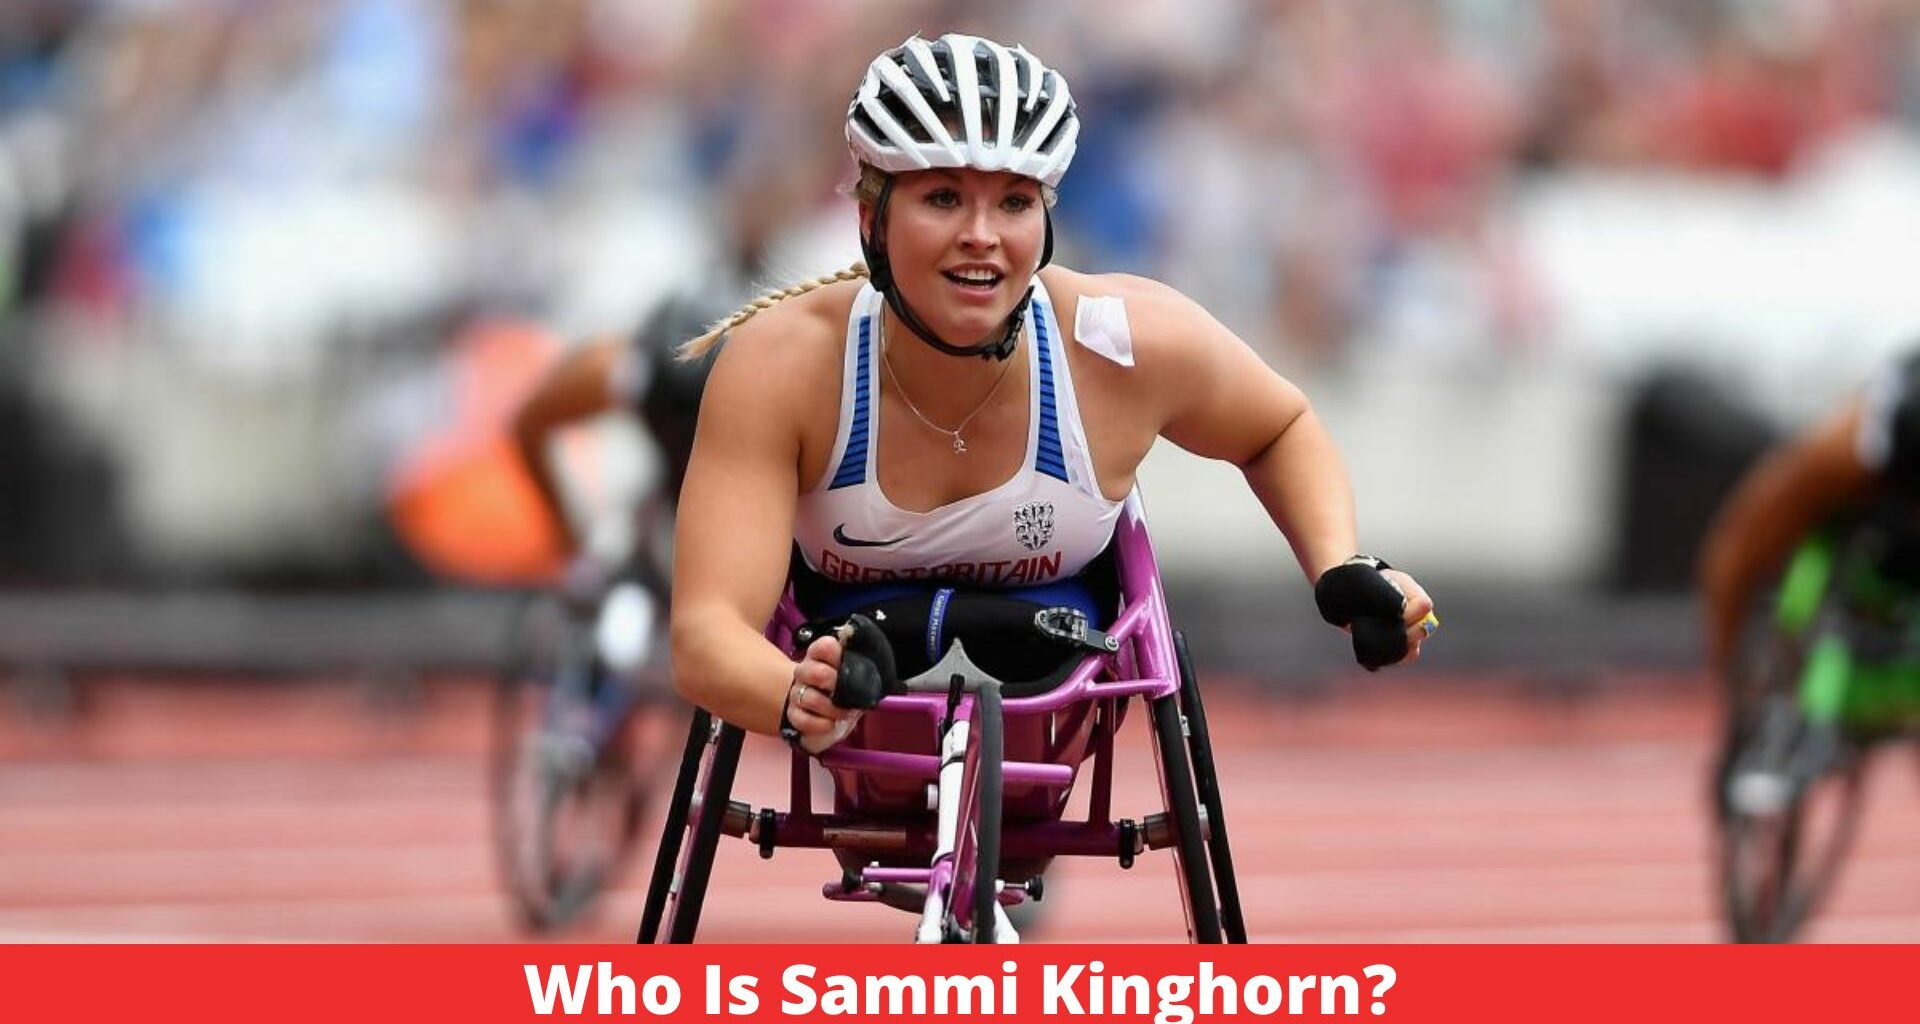 Who Is Sammi Kinghorn?